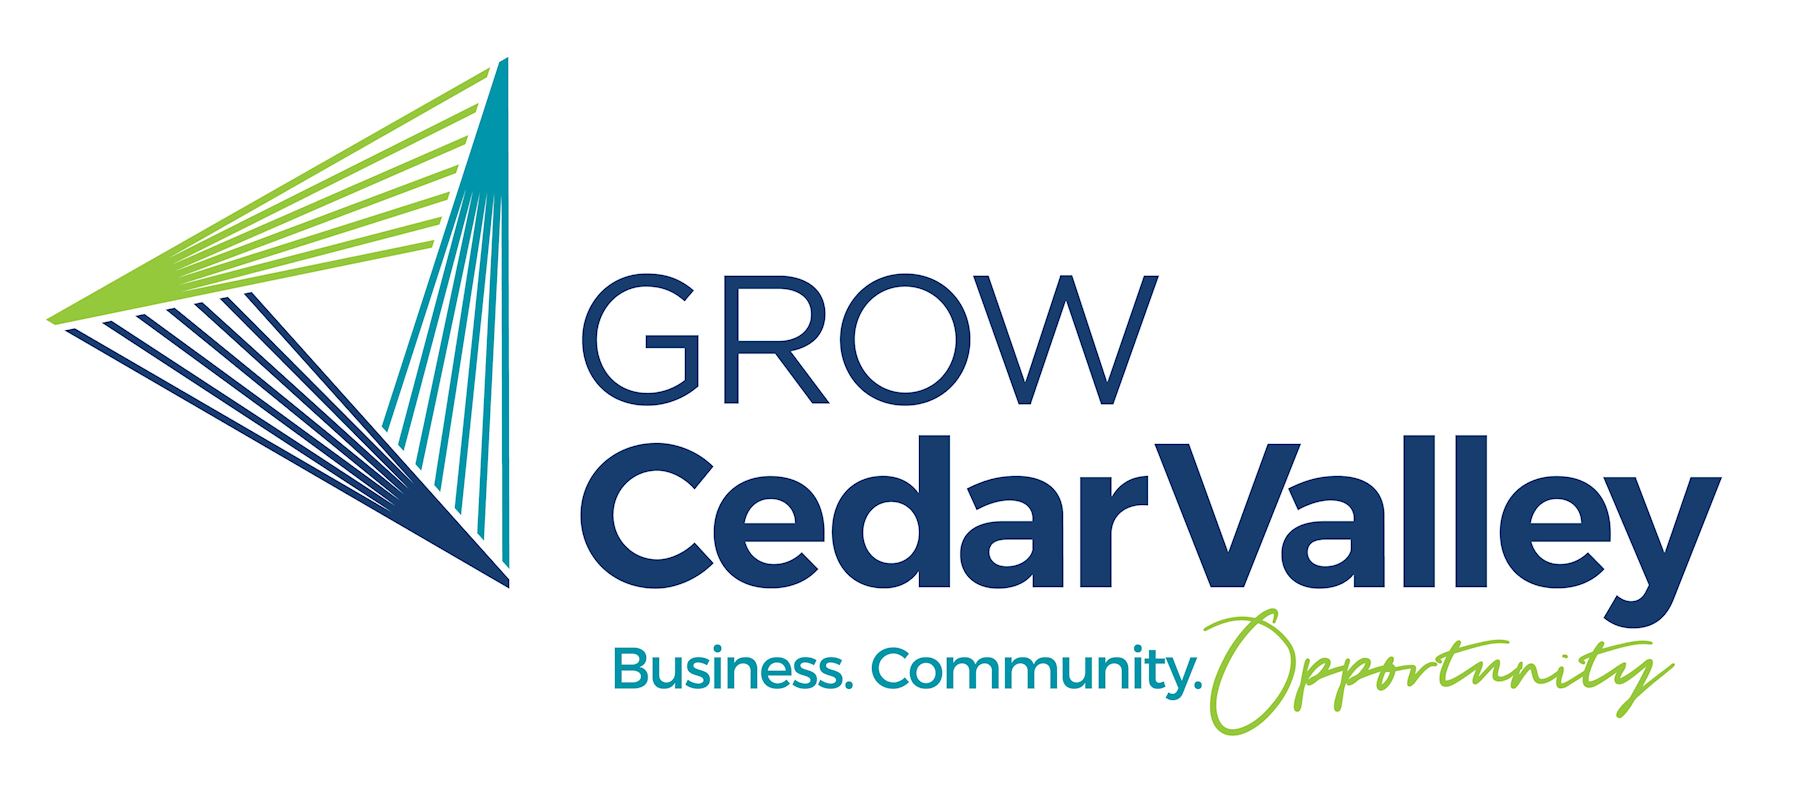 Grow Cedar Valley Elects New Leadership